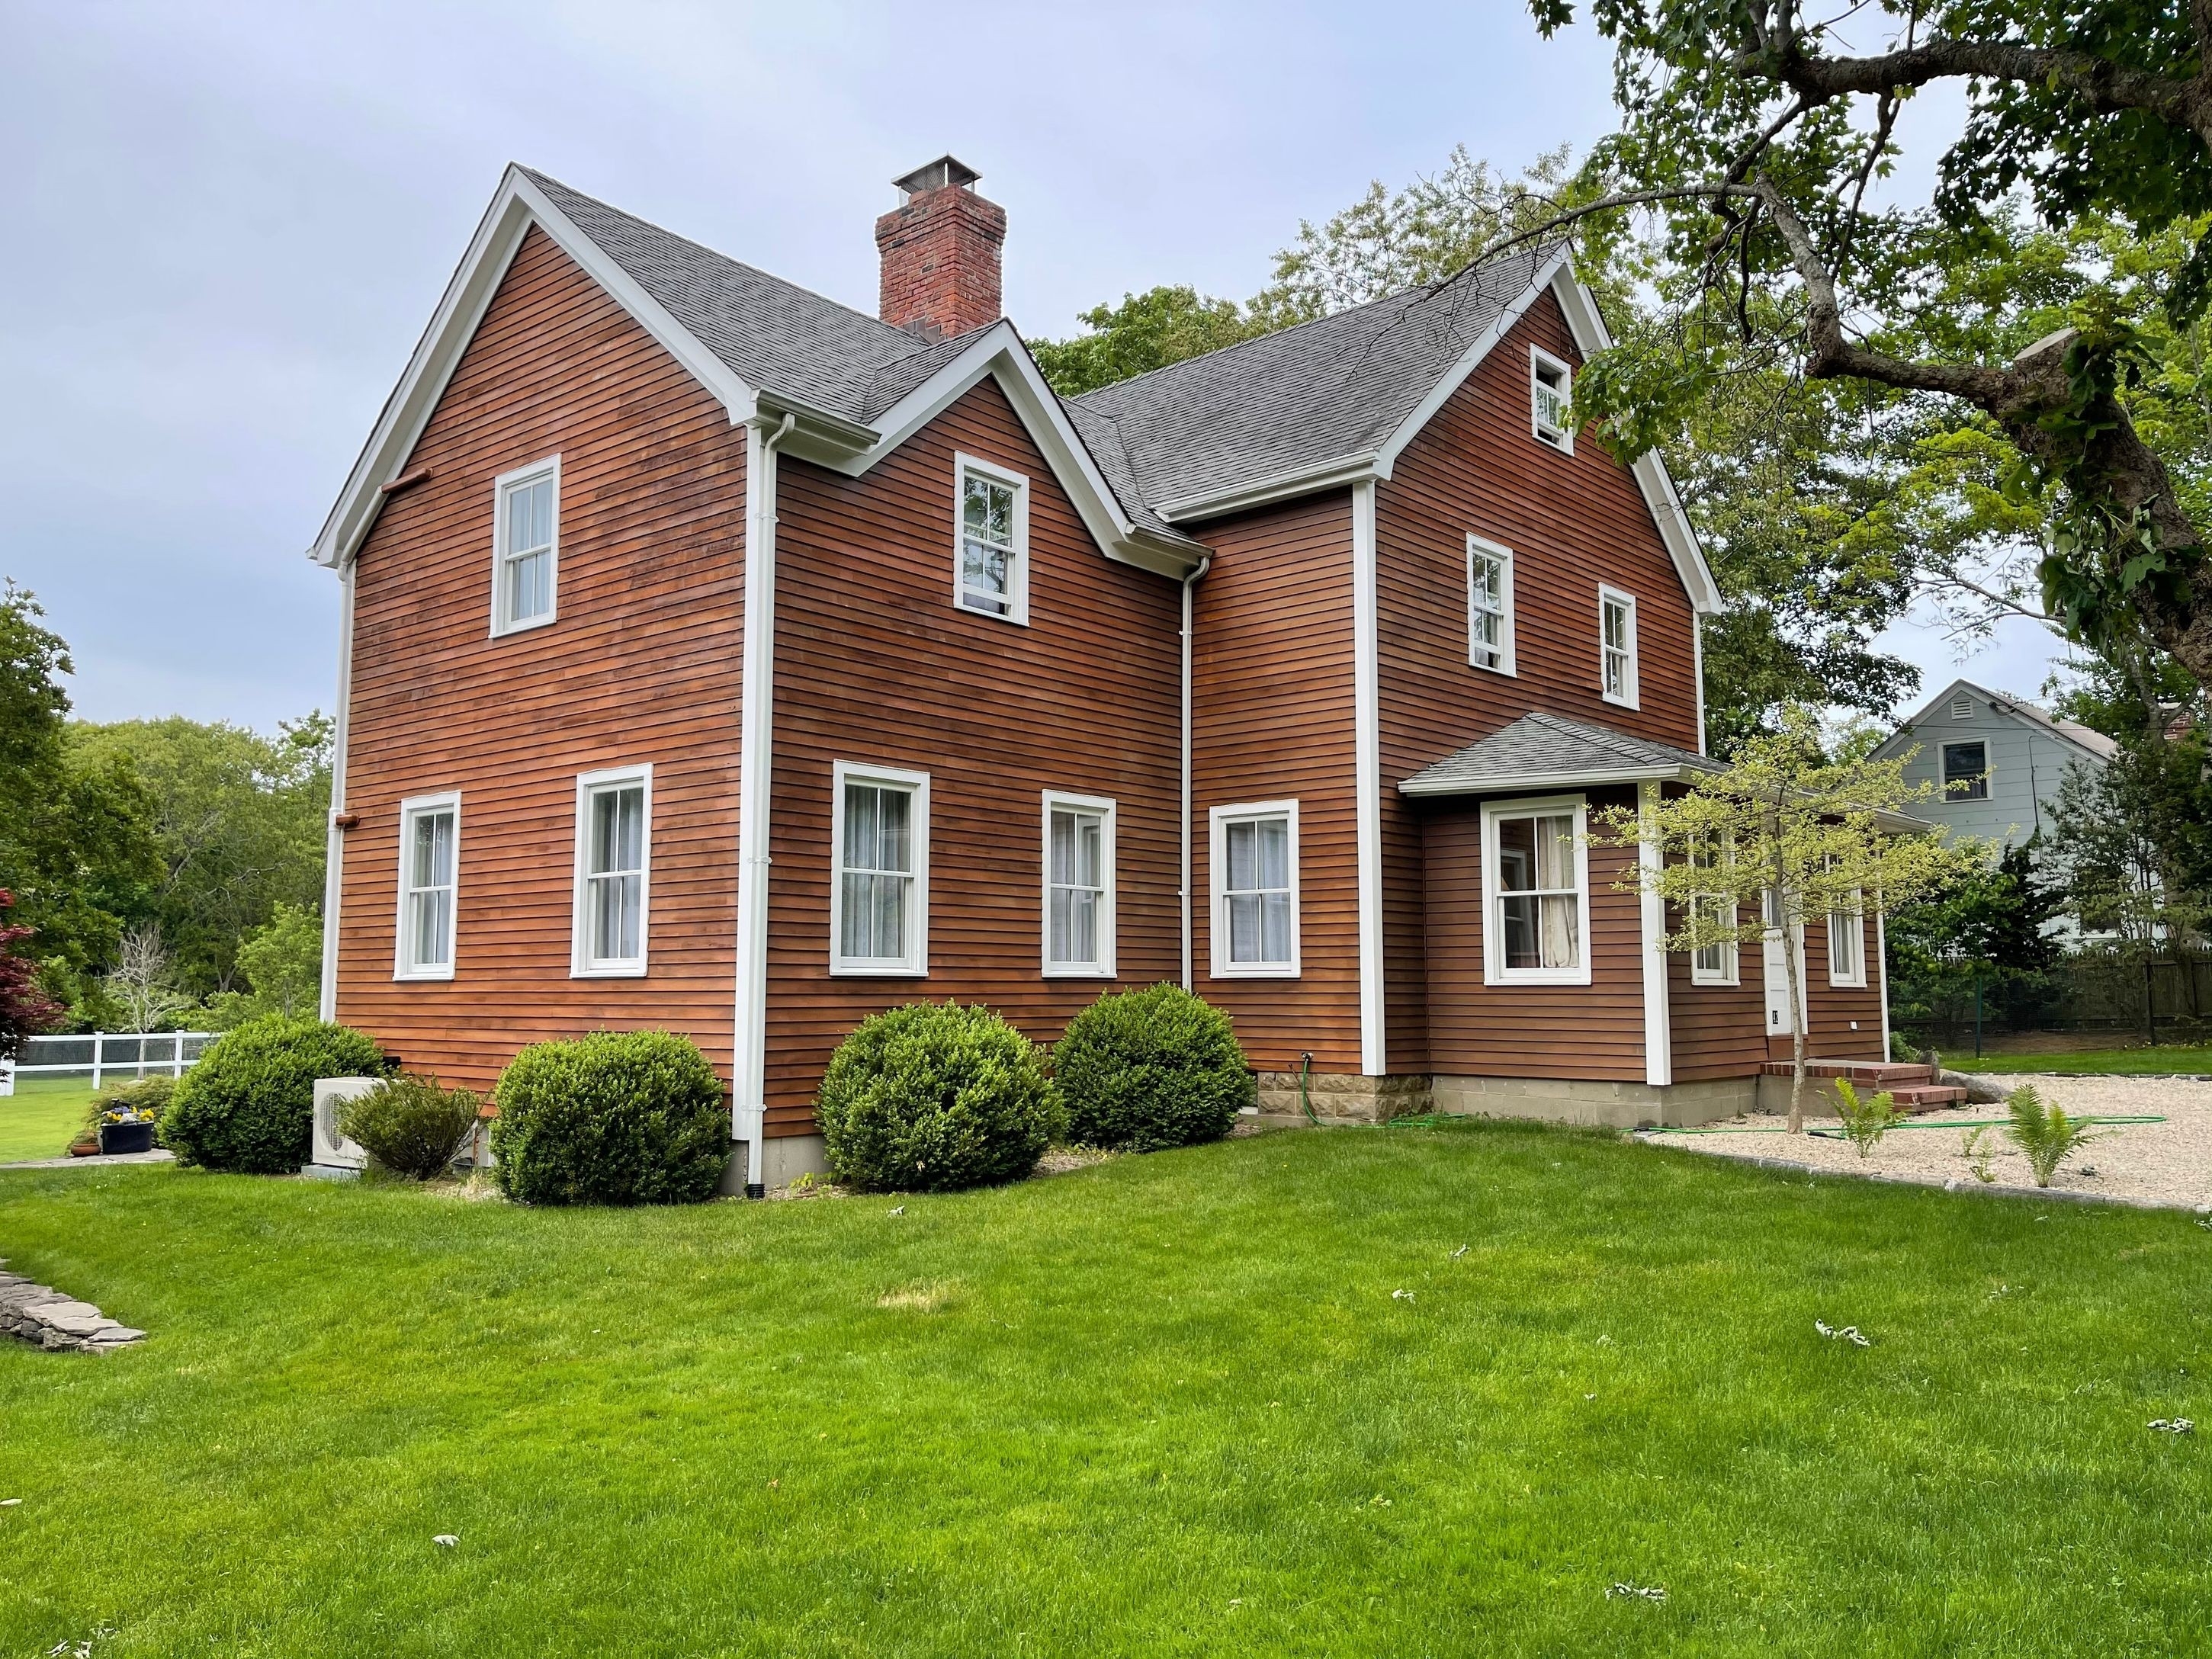 Single Family Home at Northwest Woods, East Hampton, NY 11937